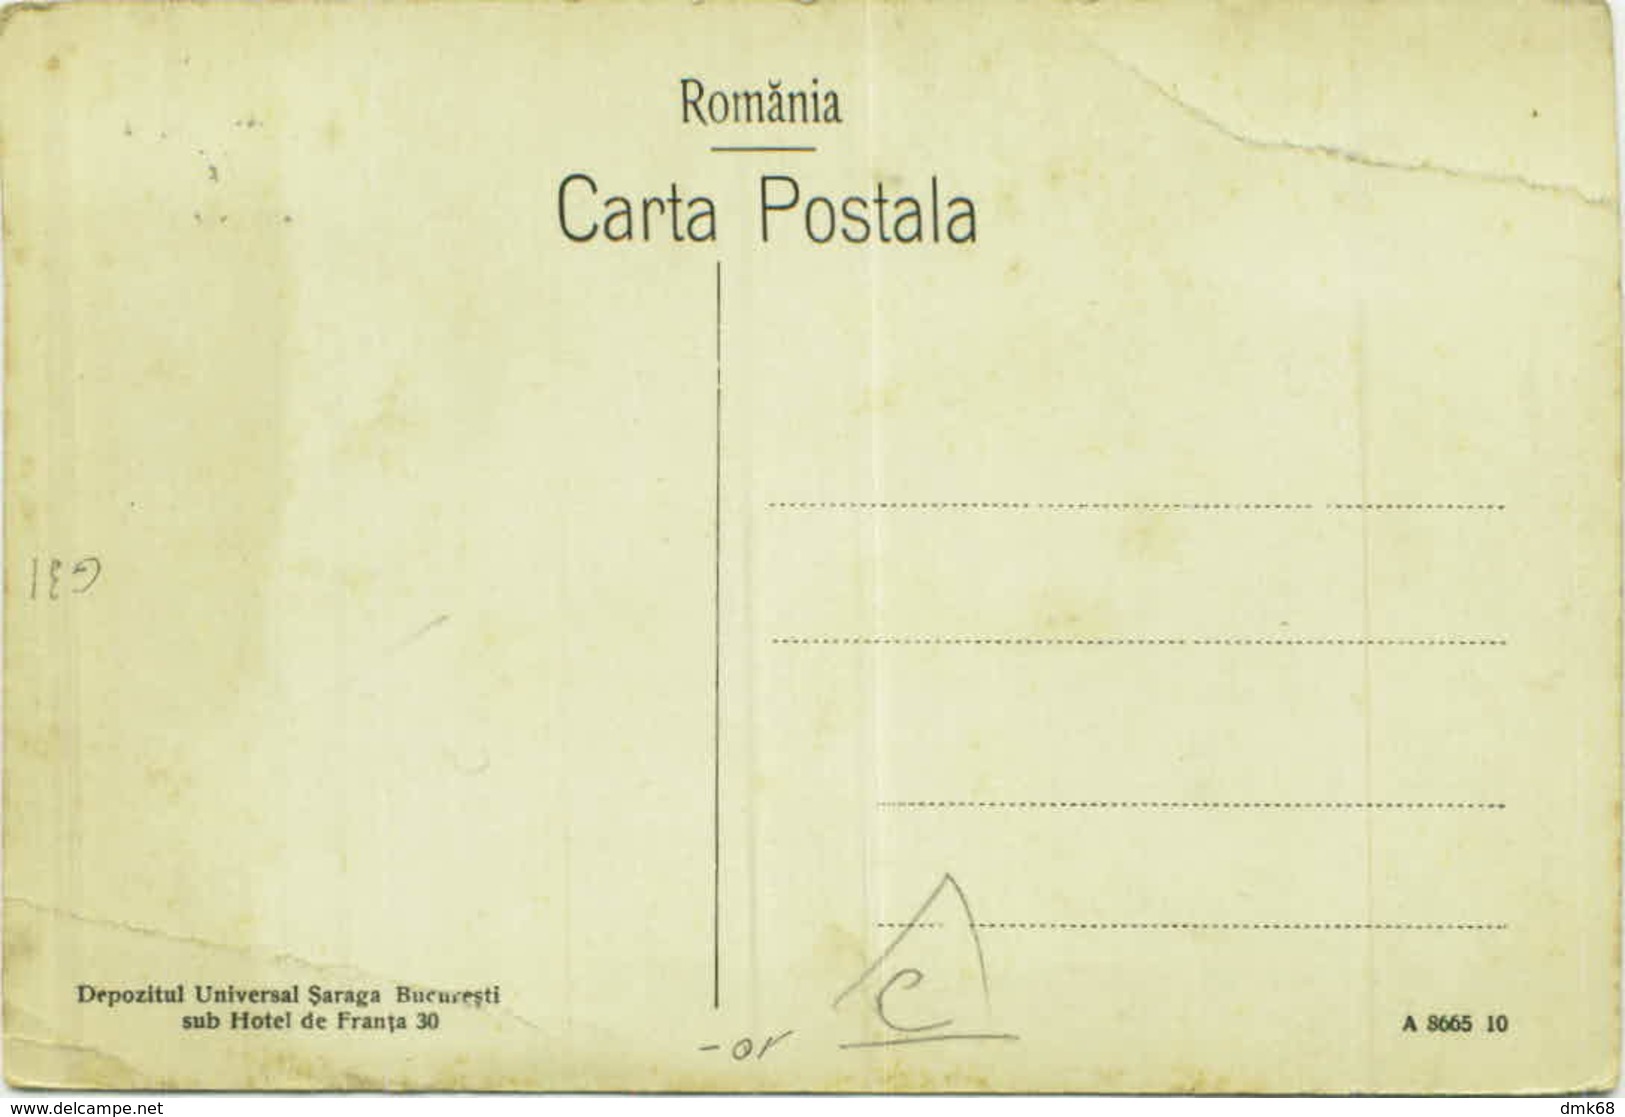 ROMANIA - SALUTARI DIN ROMANIA - PORT NATIONAL - DEPOZITUL UNIVERSAL SARAGA BUCARESTI SUB HOTEL DE FRANTA 1910s (BG3895) - Romania